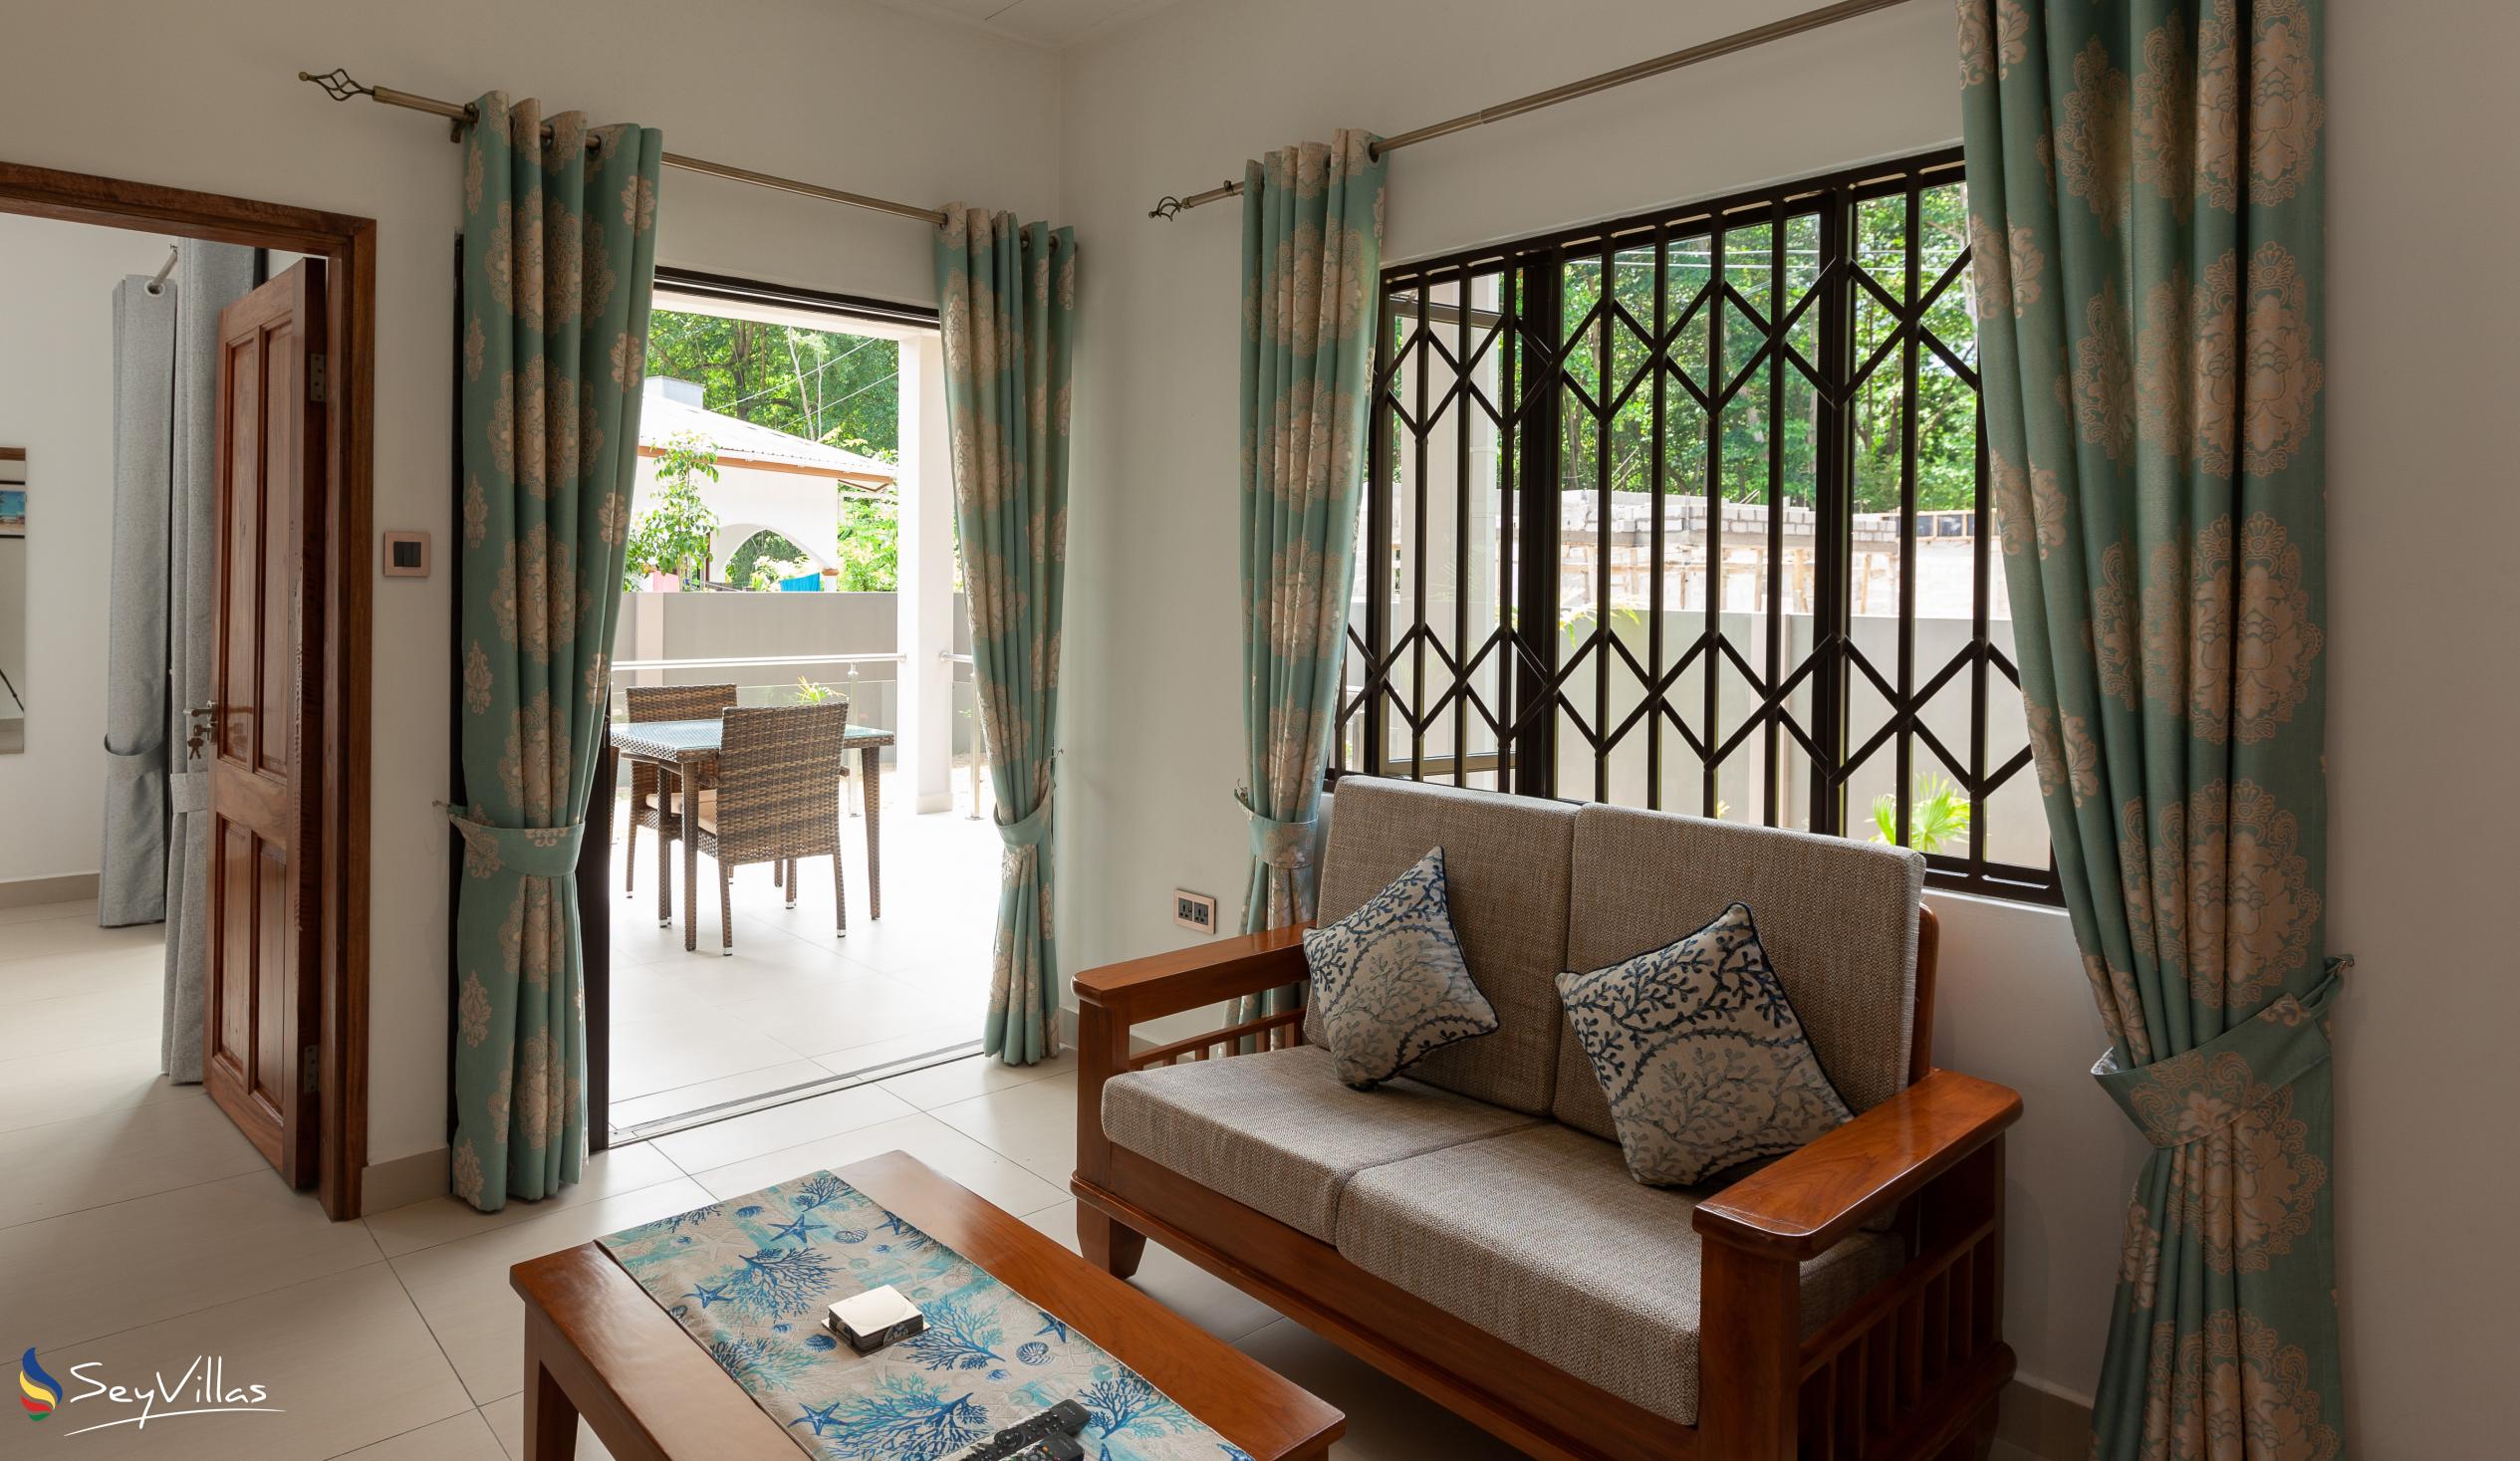 Foto 36: Palm Holiday Apartments - Appartement im Erdgeschoss - Praslin (Seychellen)